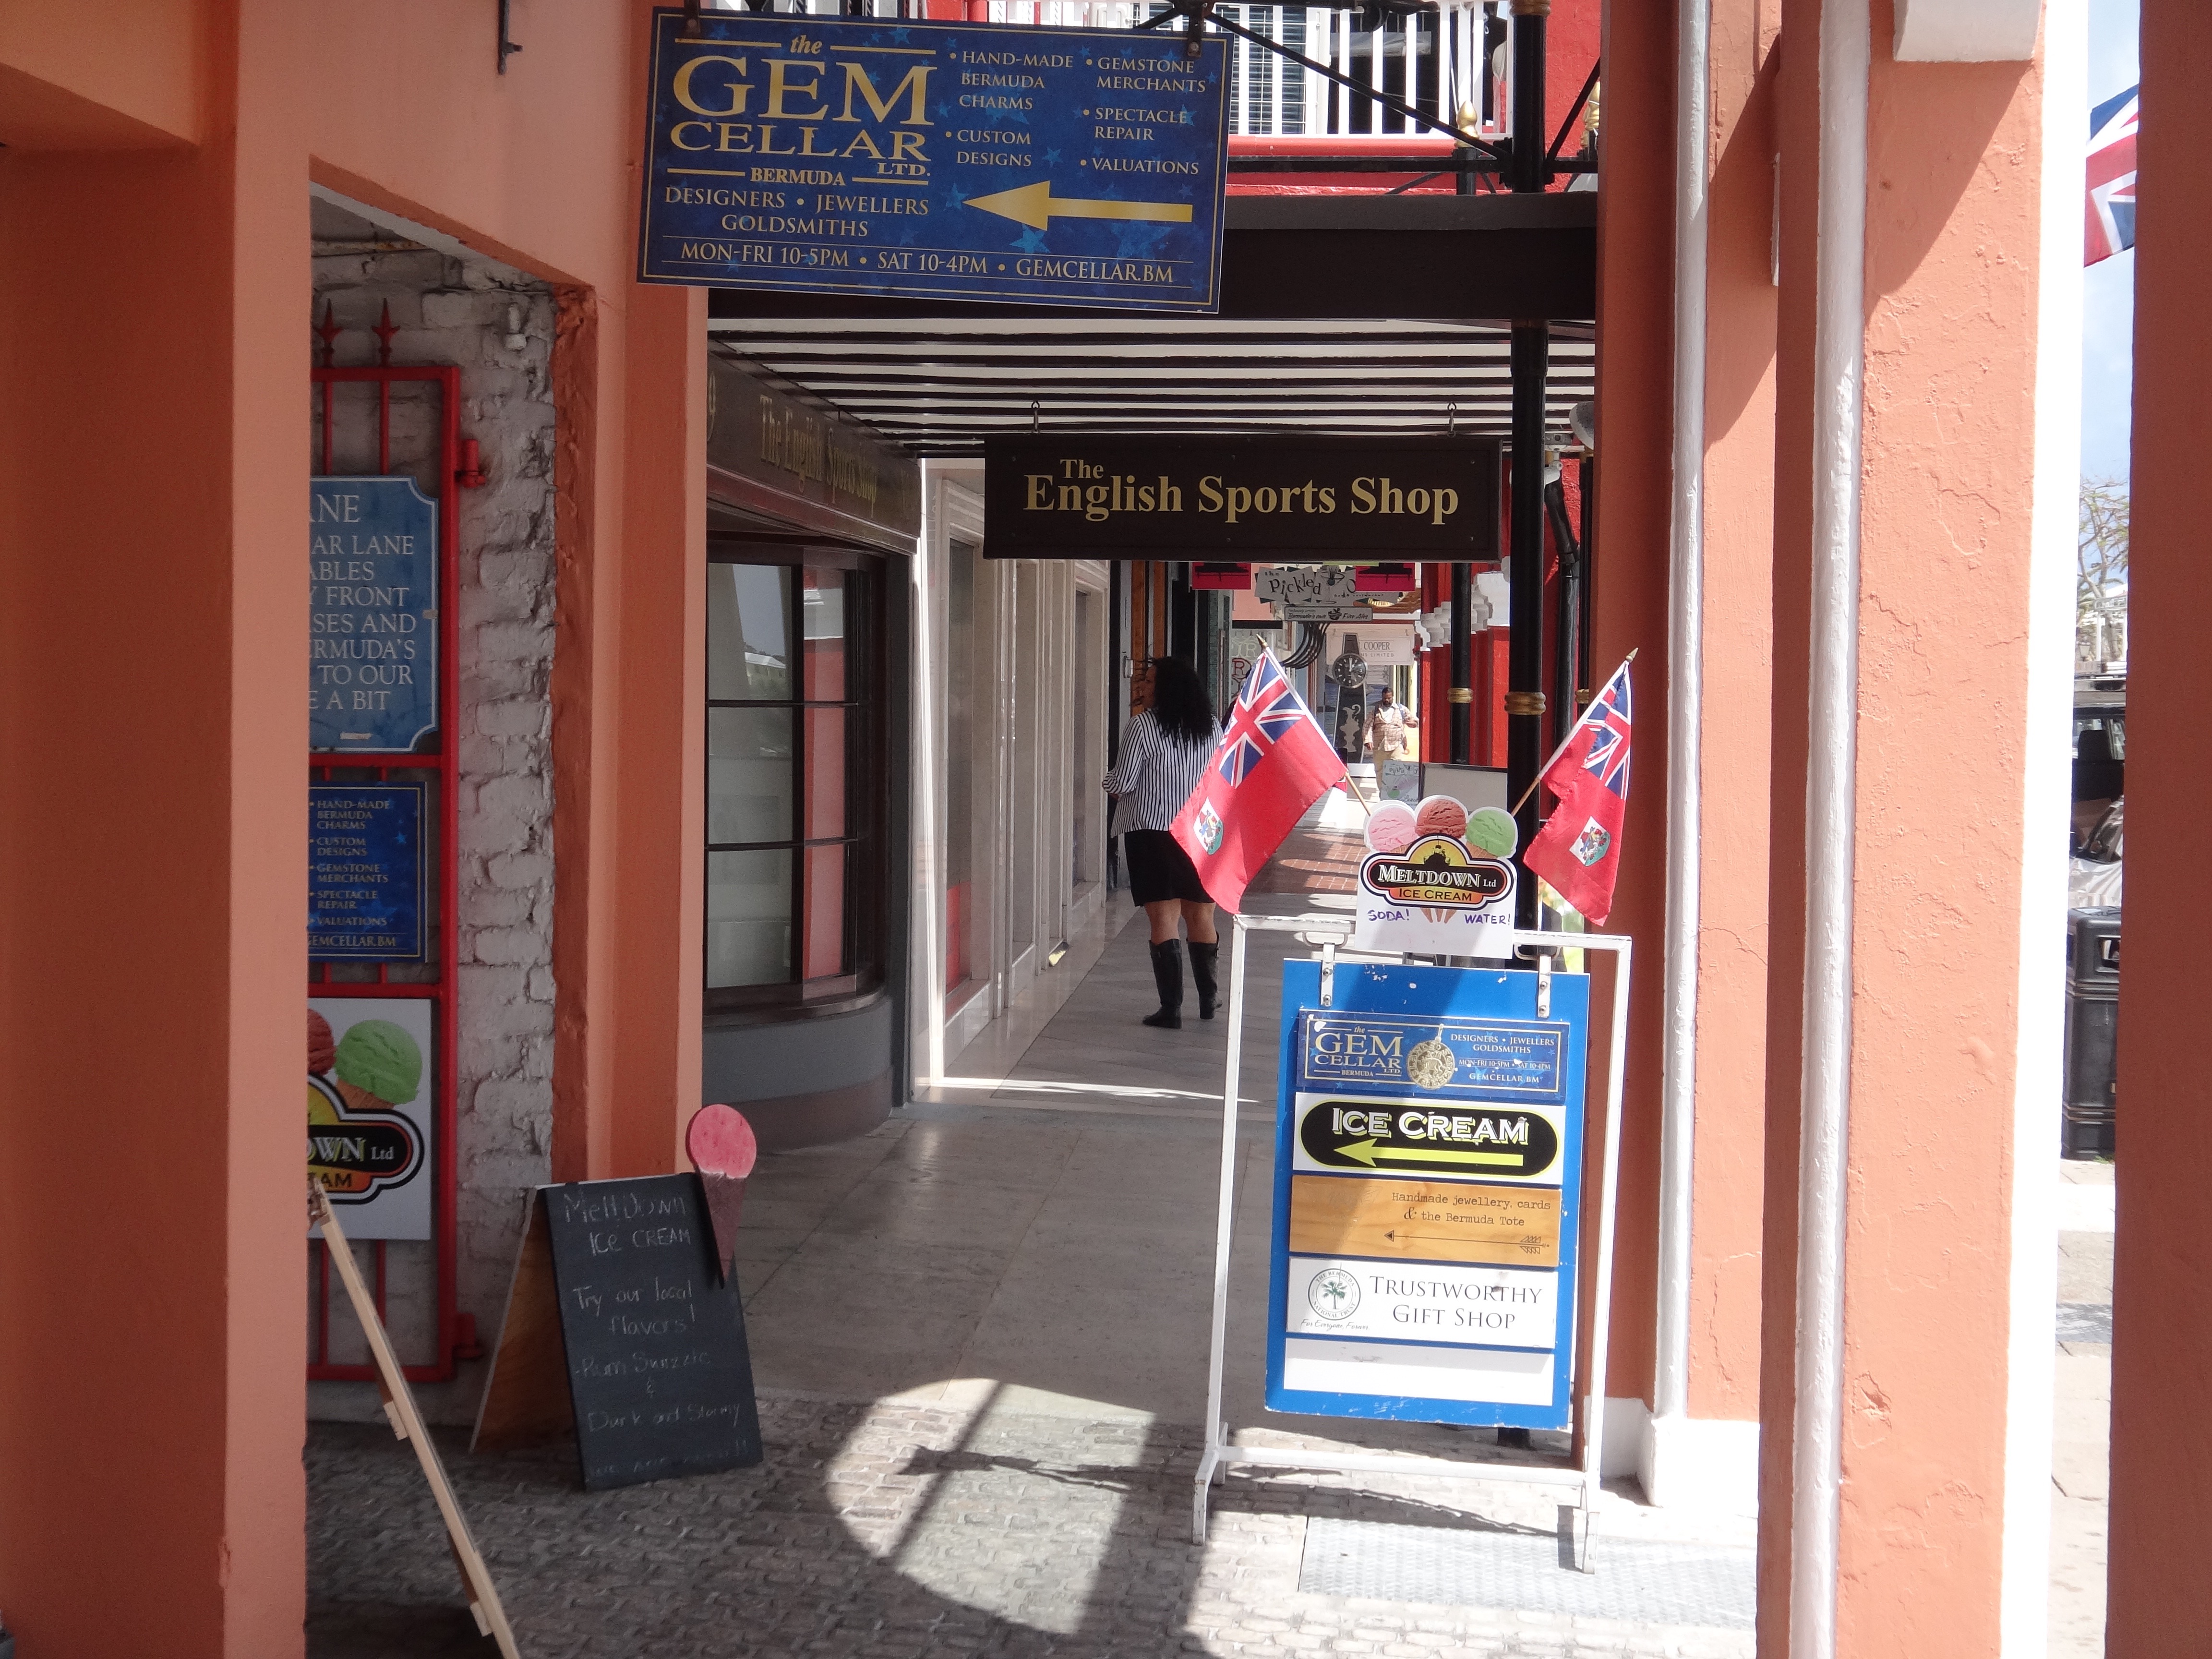 Gem Cellar Bermuda Ltd. The